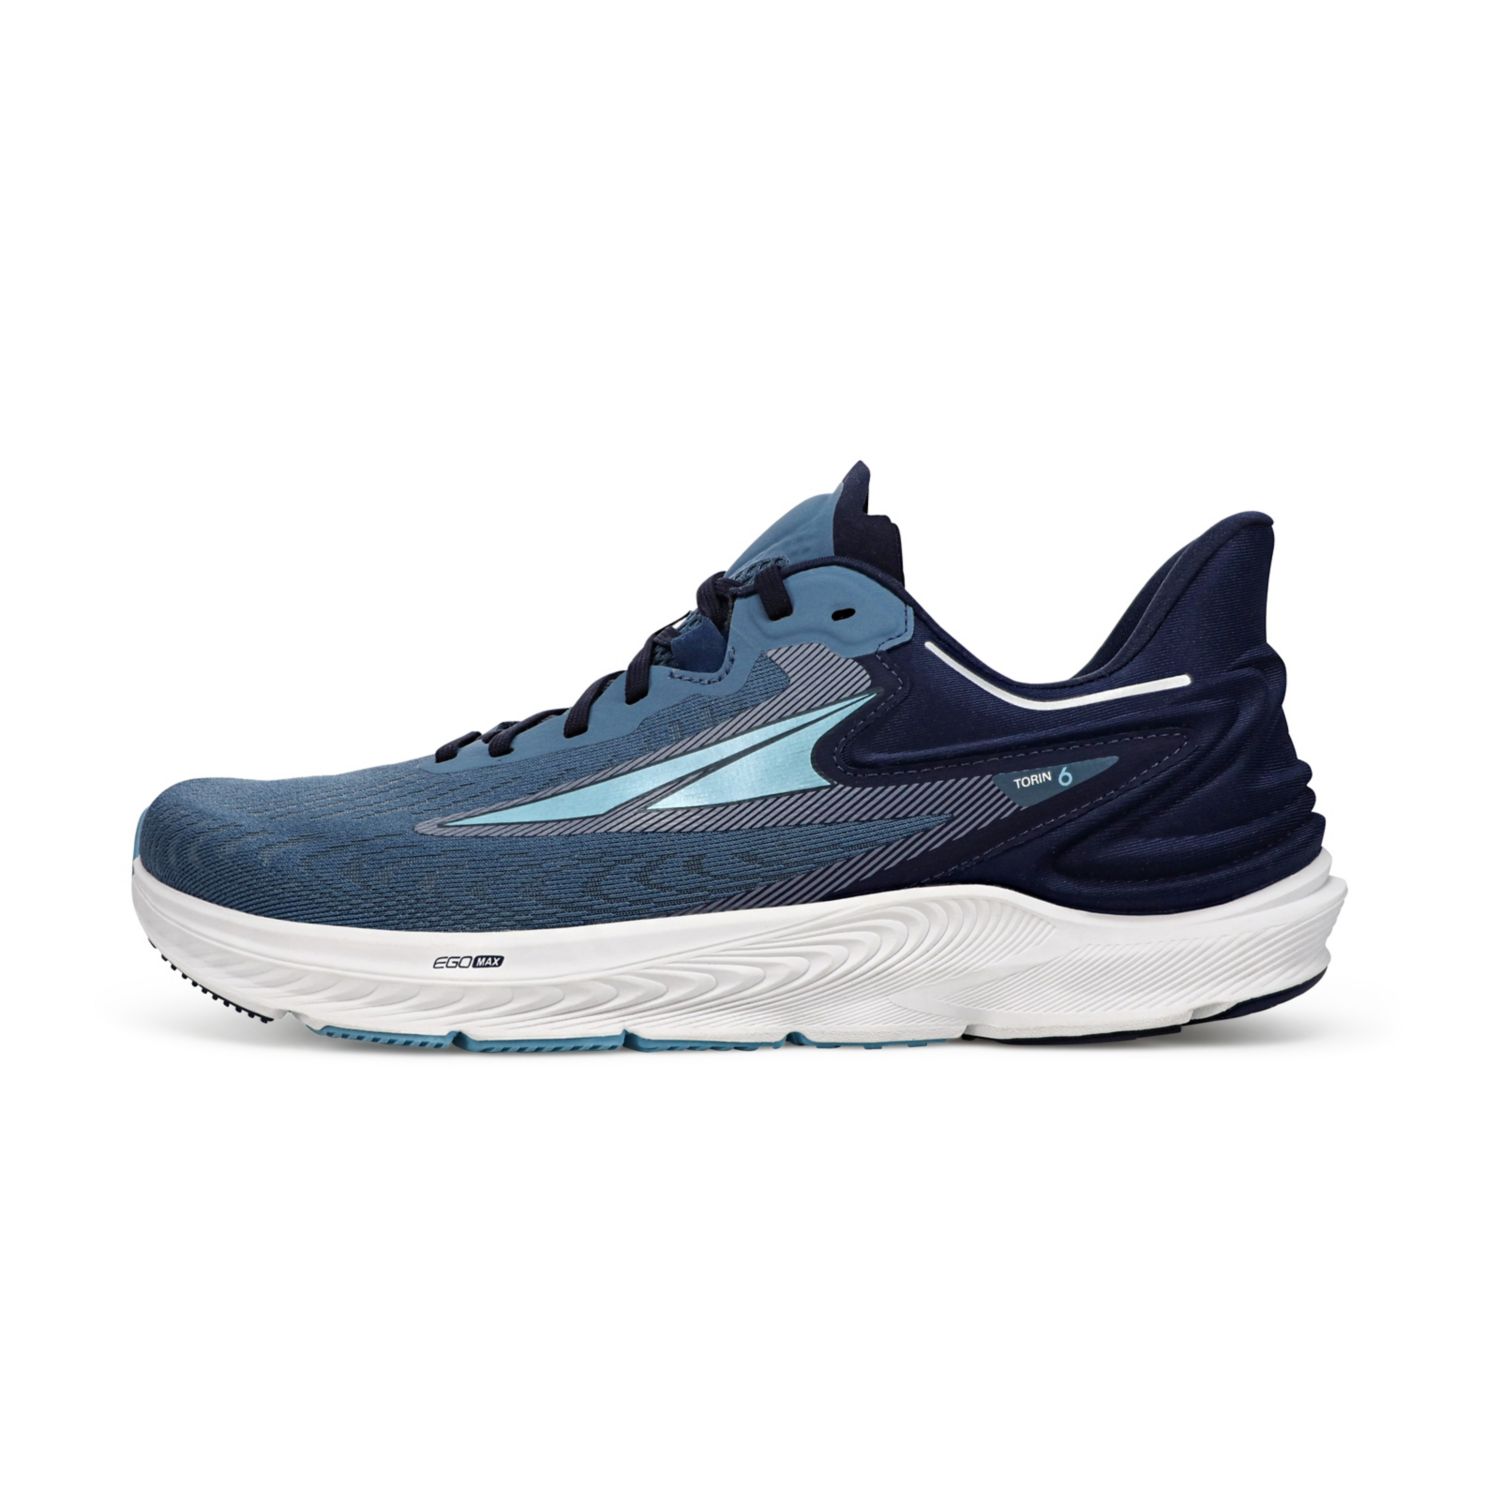 Blue Altra Torin 6 Men's Road Running Shoes | Ireland-23615049